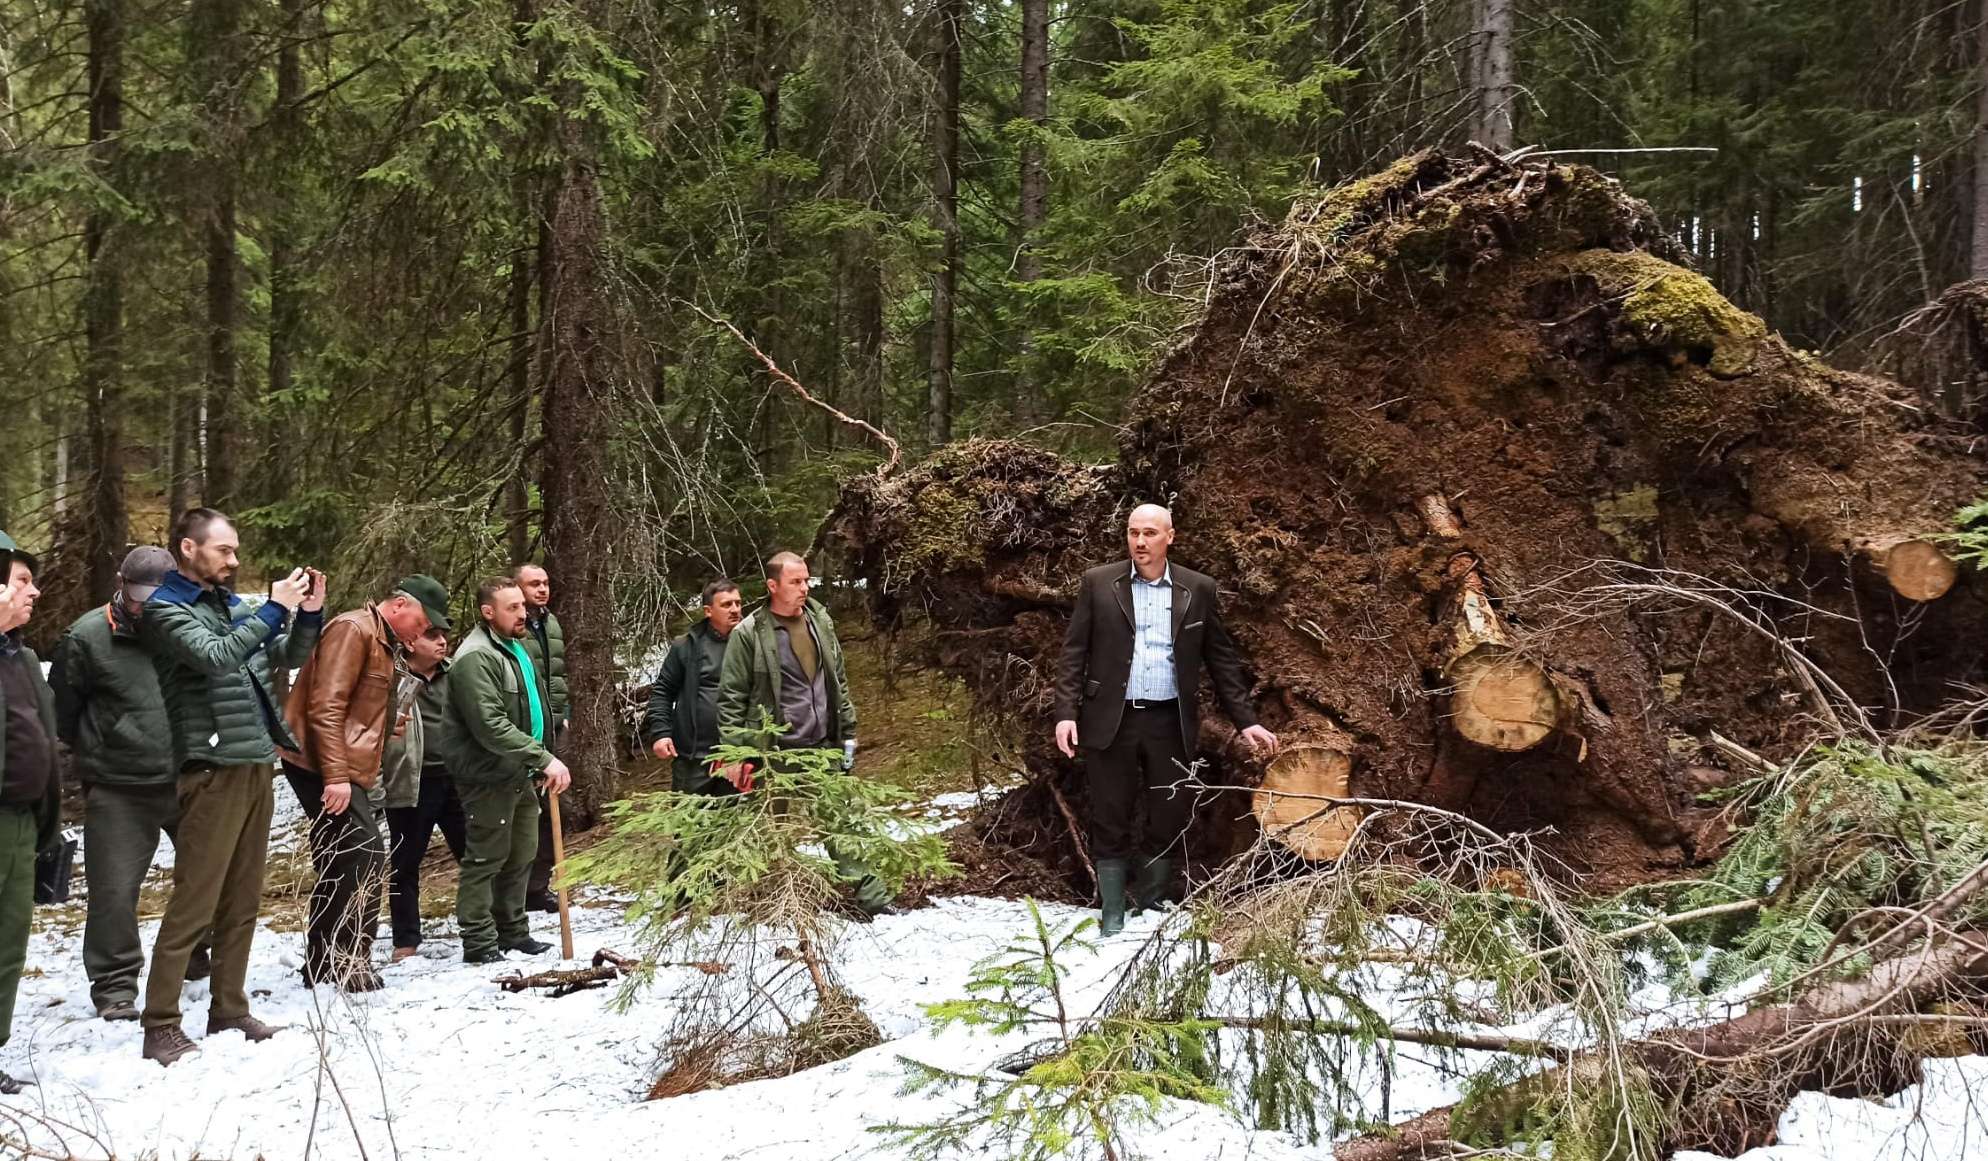 stomach ache mordant Duchess Un nou sistem de marcat arbori, prezentat la Ocolul Ghimeș-Făget. Concluzii  - ForestMania